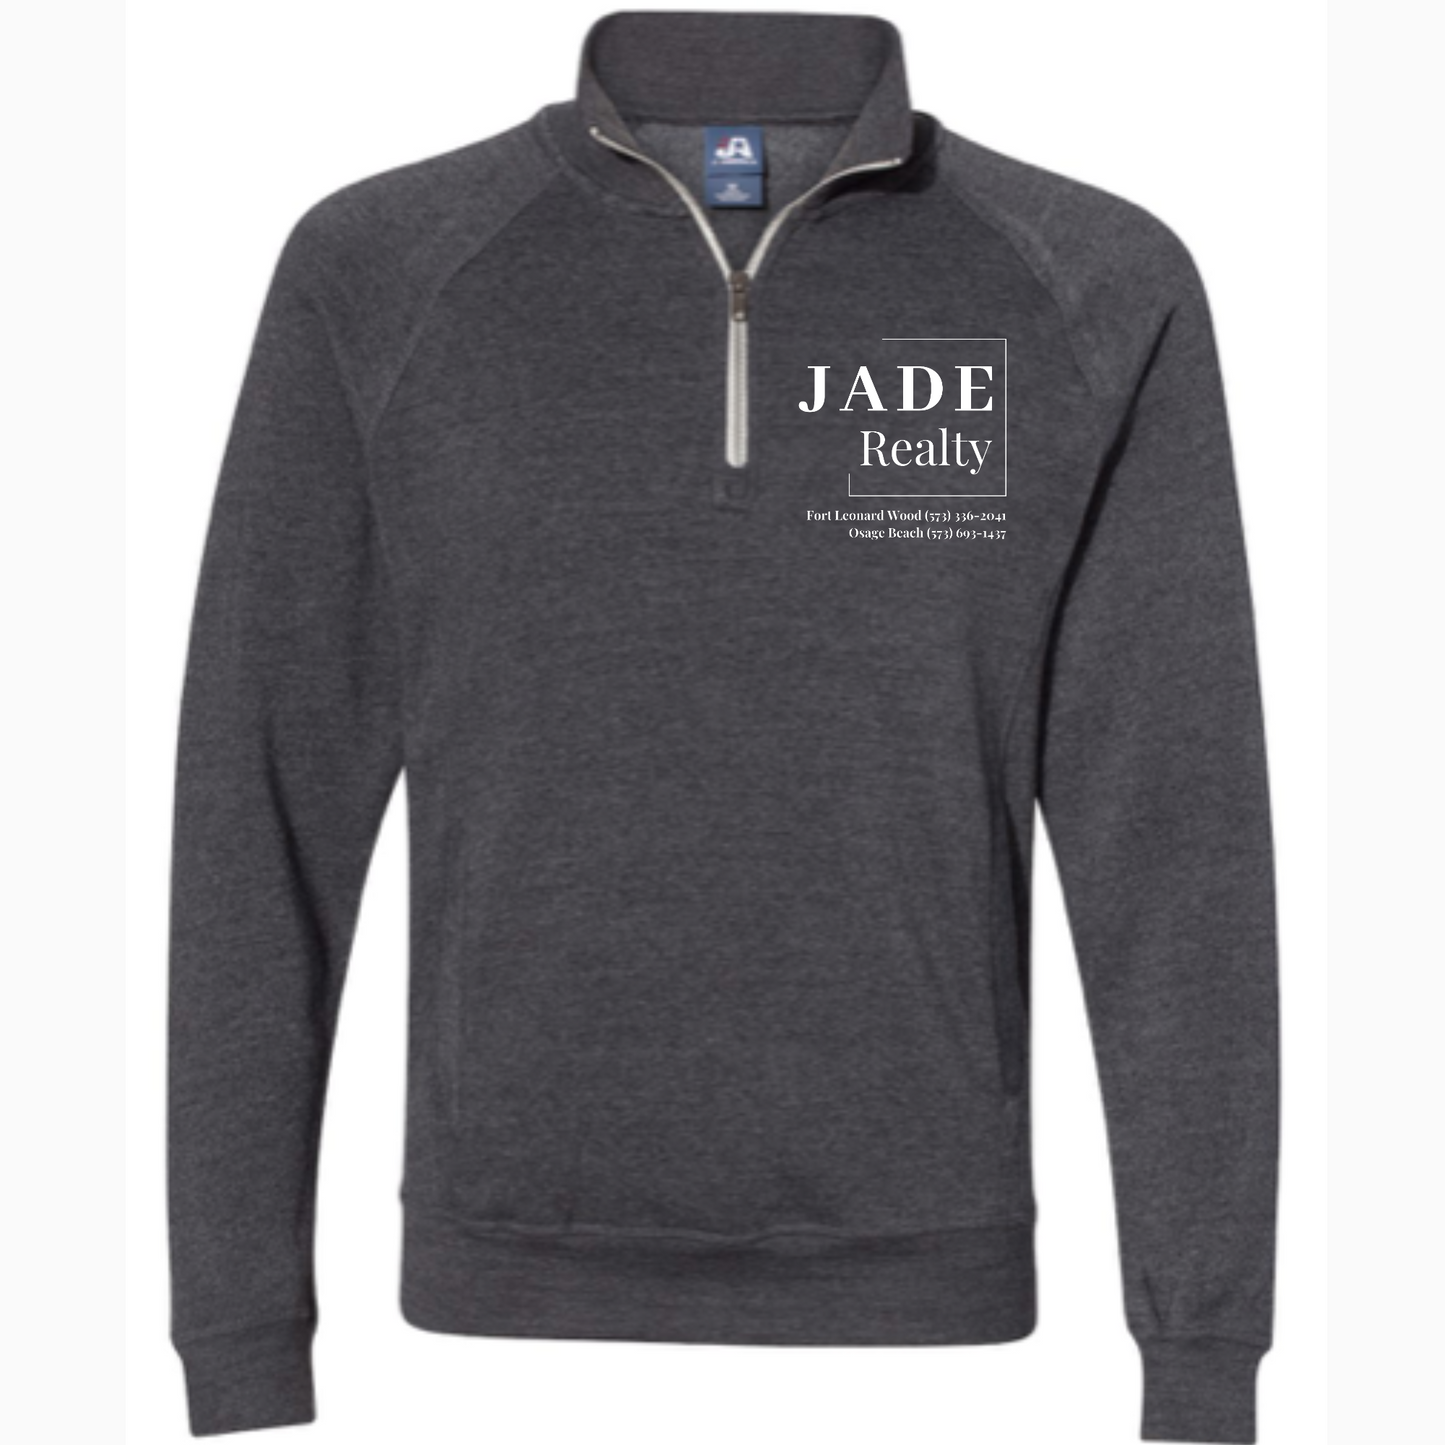 Jade Realty J. America - Triblend Quarter-Zip Sweatshirt